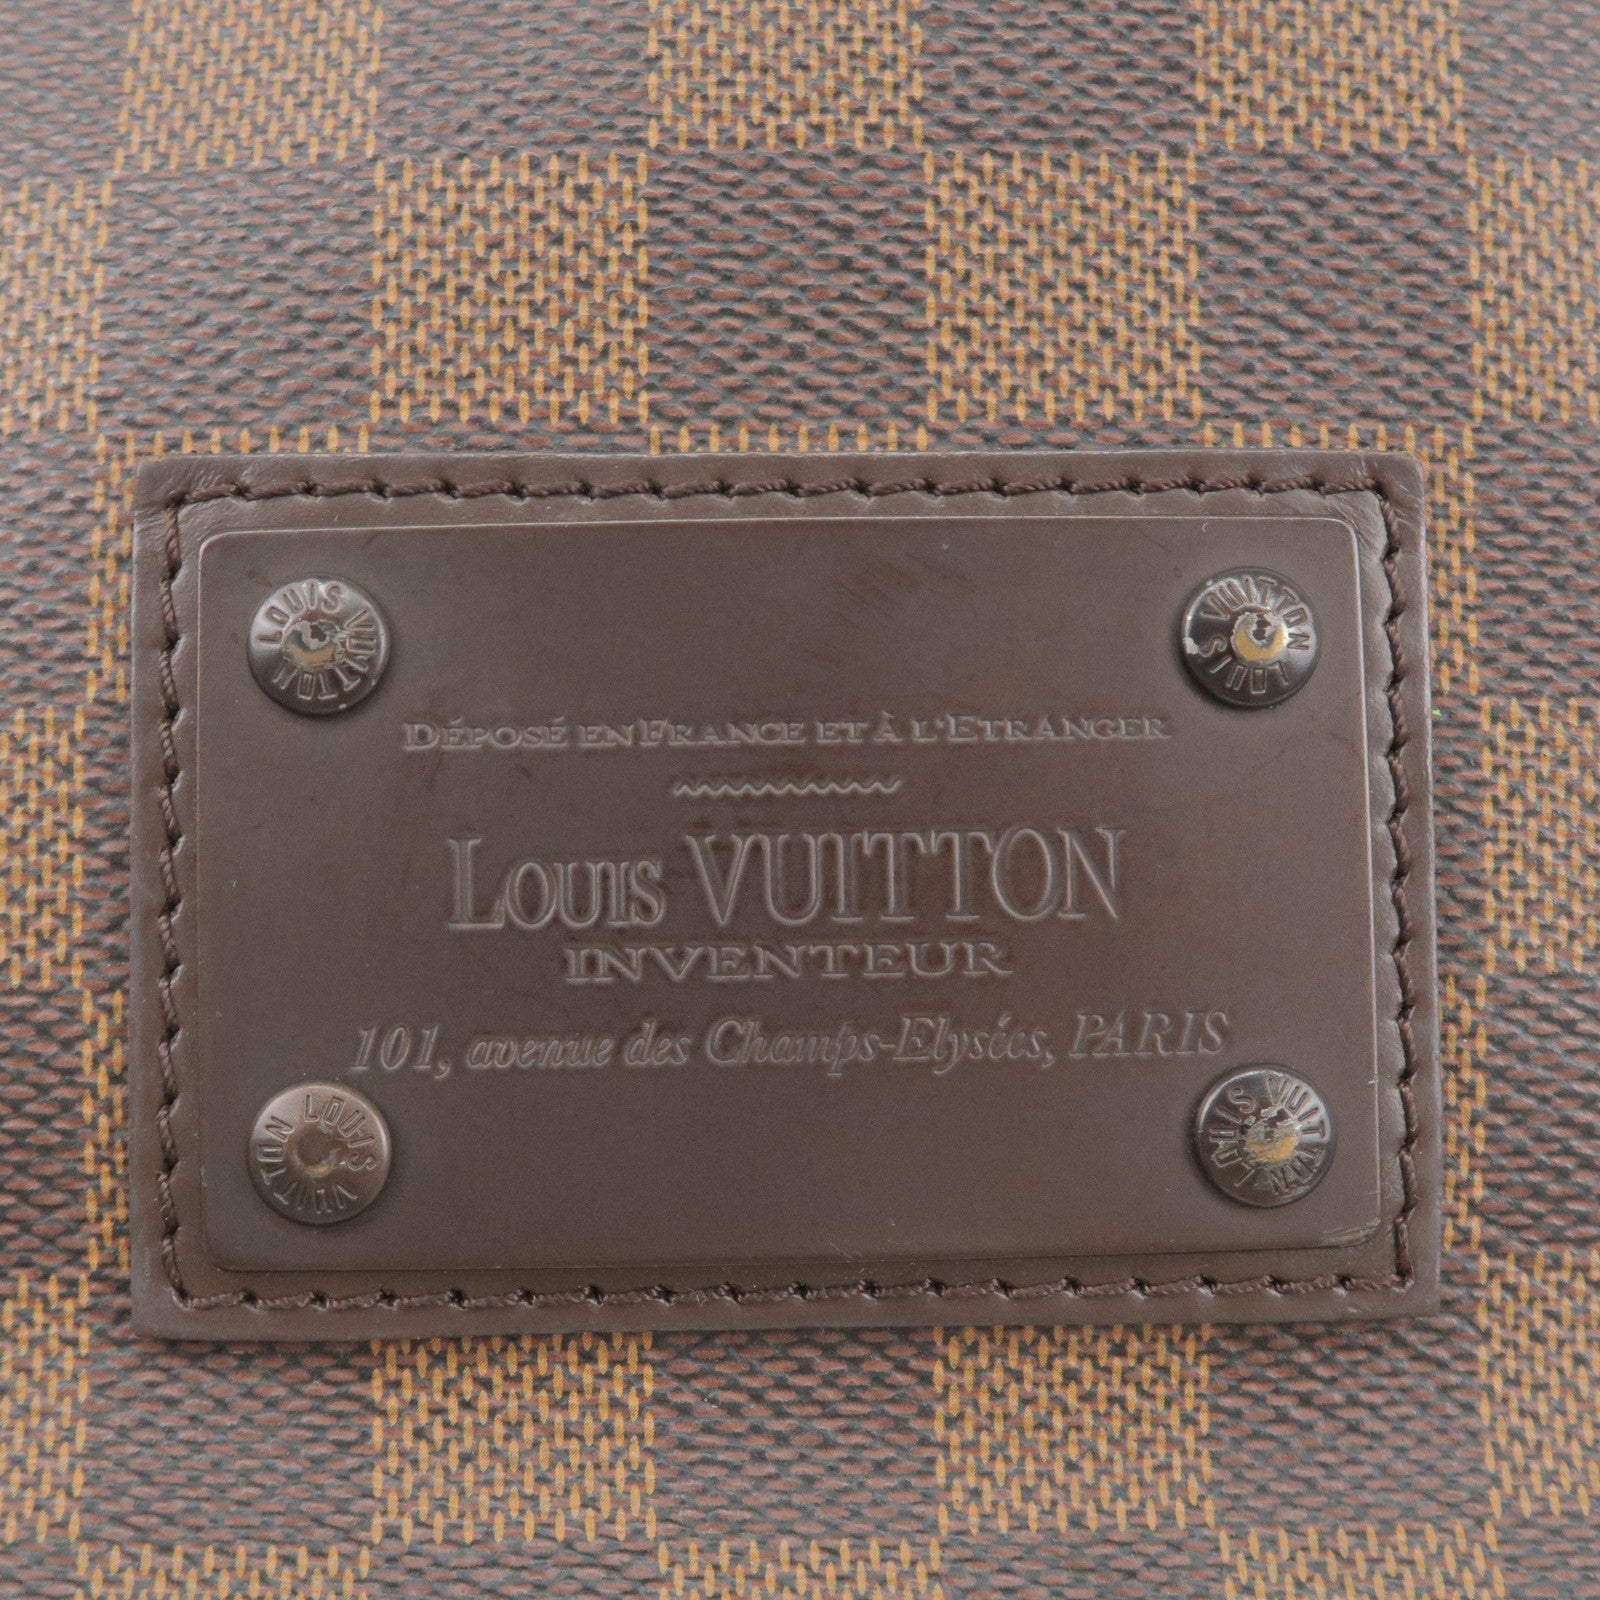 Louis VUITTON inventeur Brooklyn belt bag. Also shoulder bag